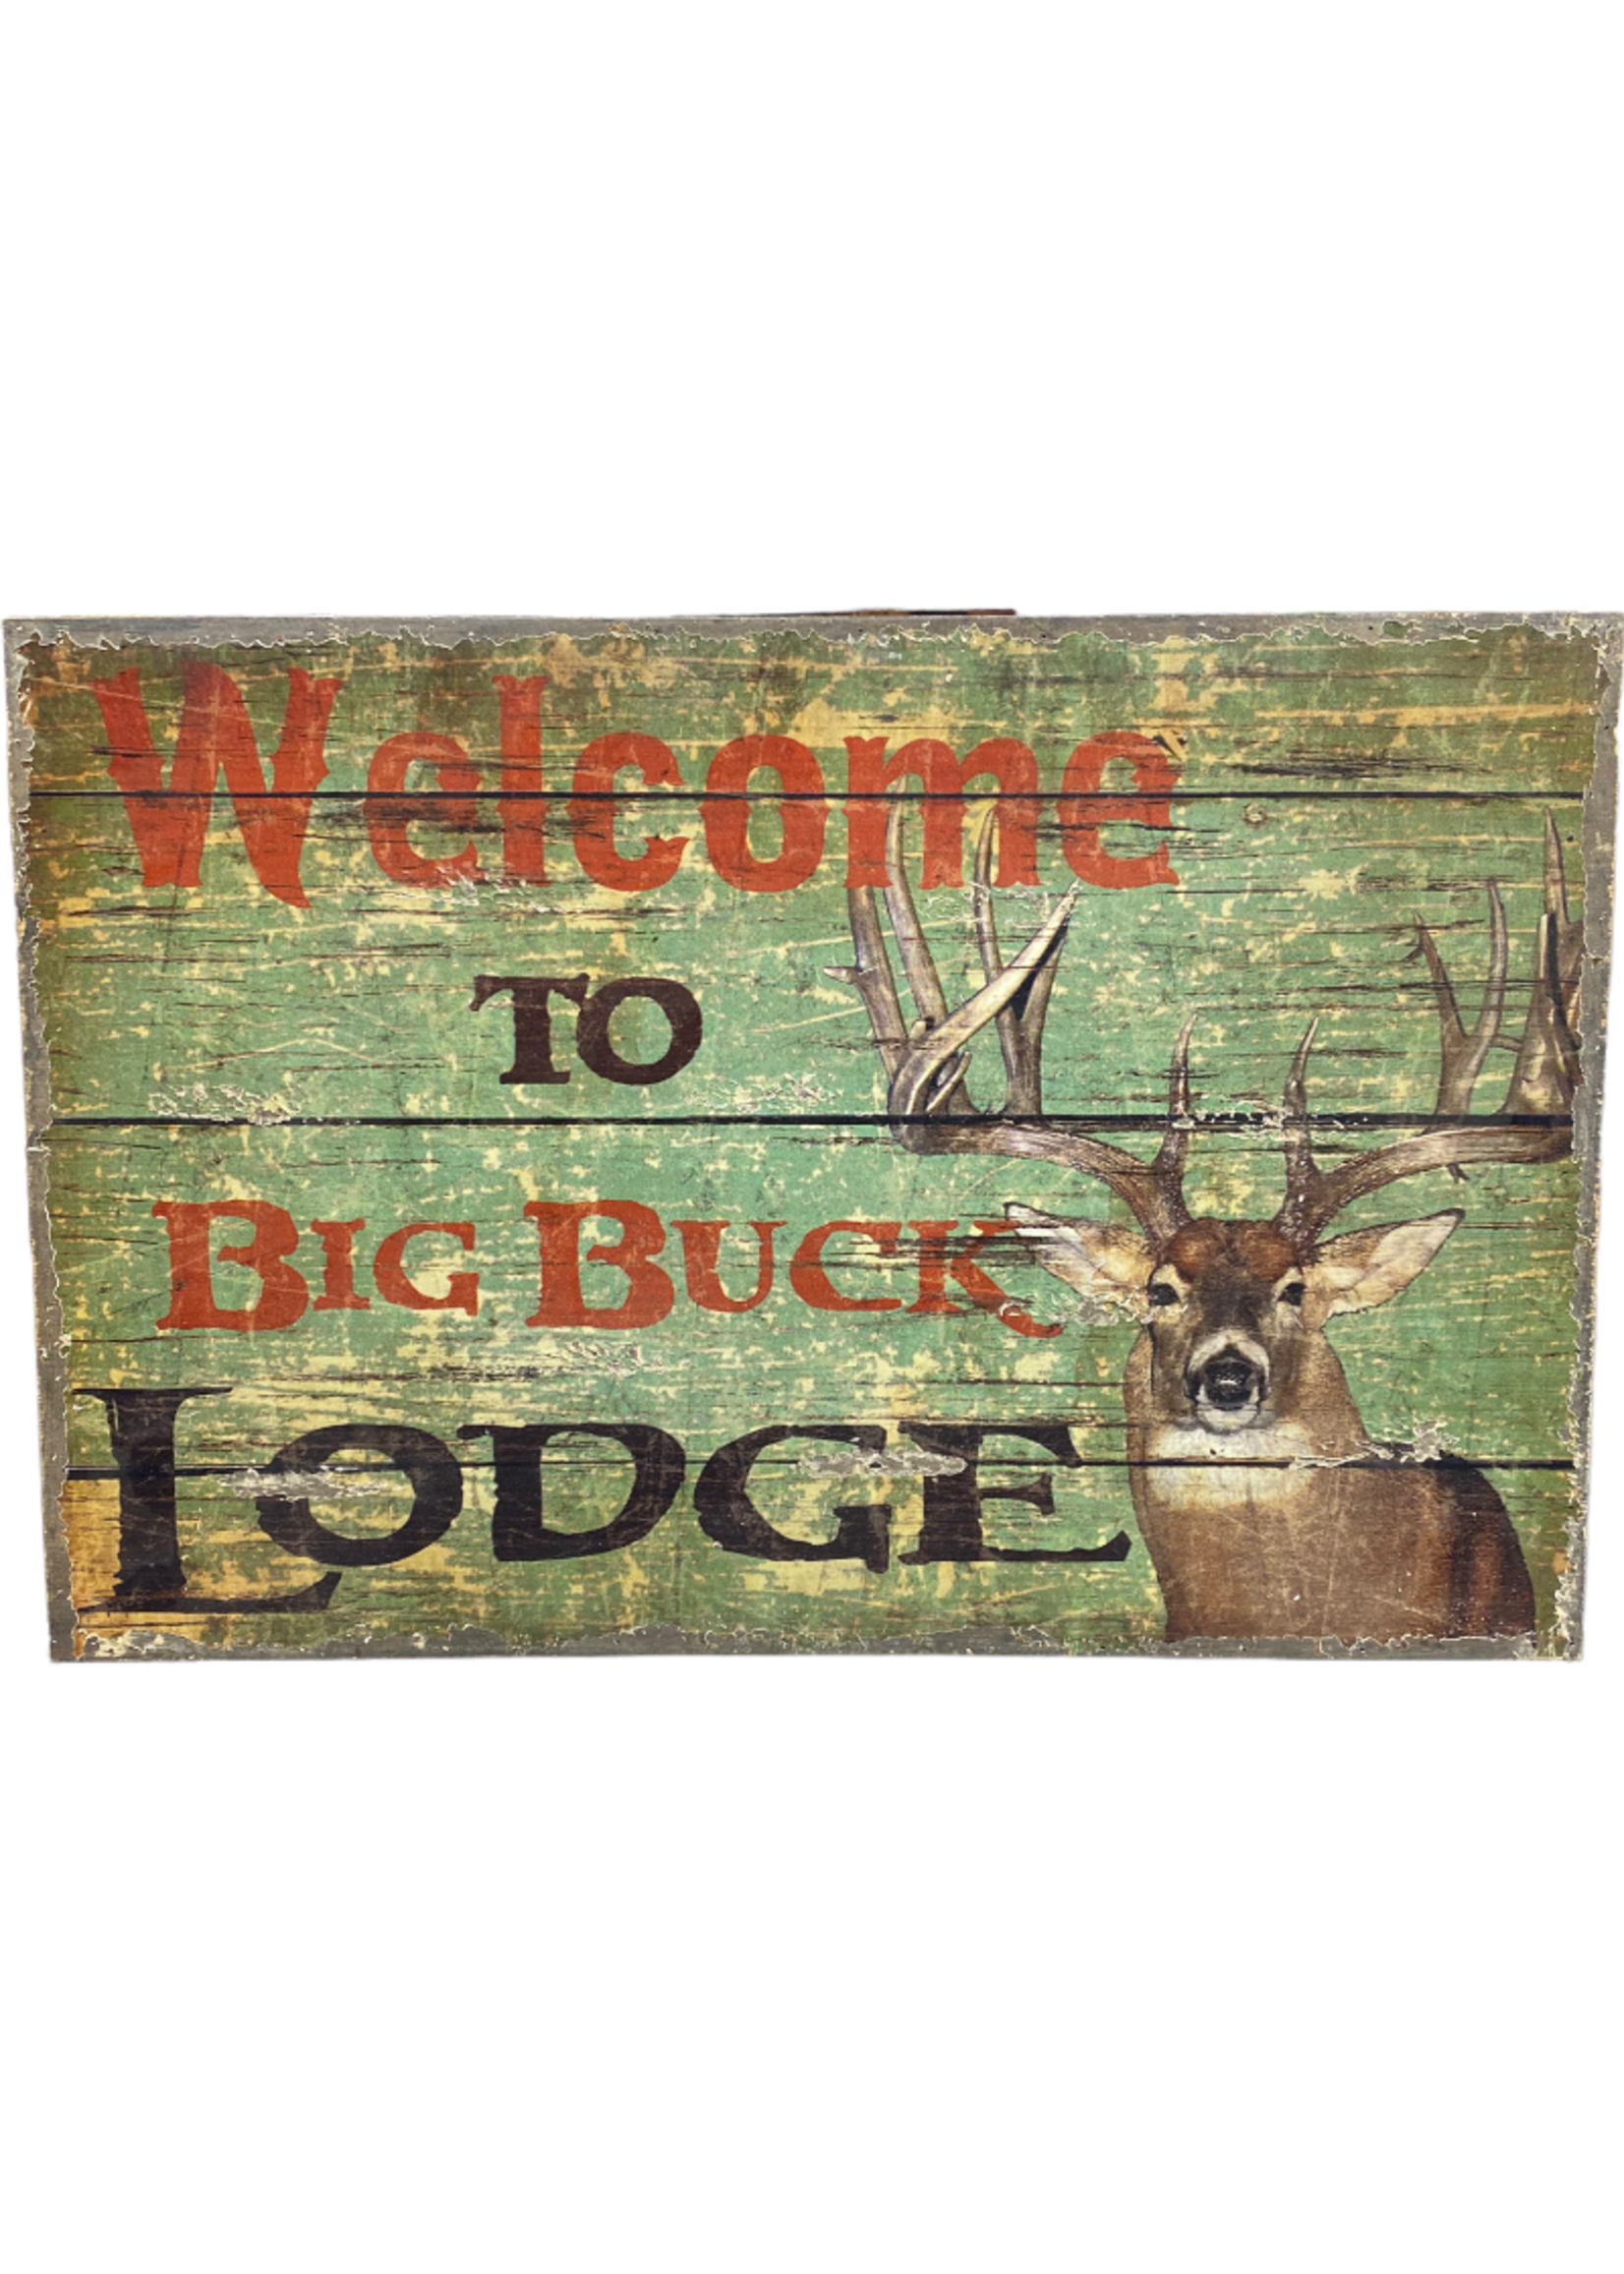 Welcome to Big Buck Lodge